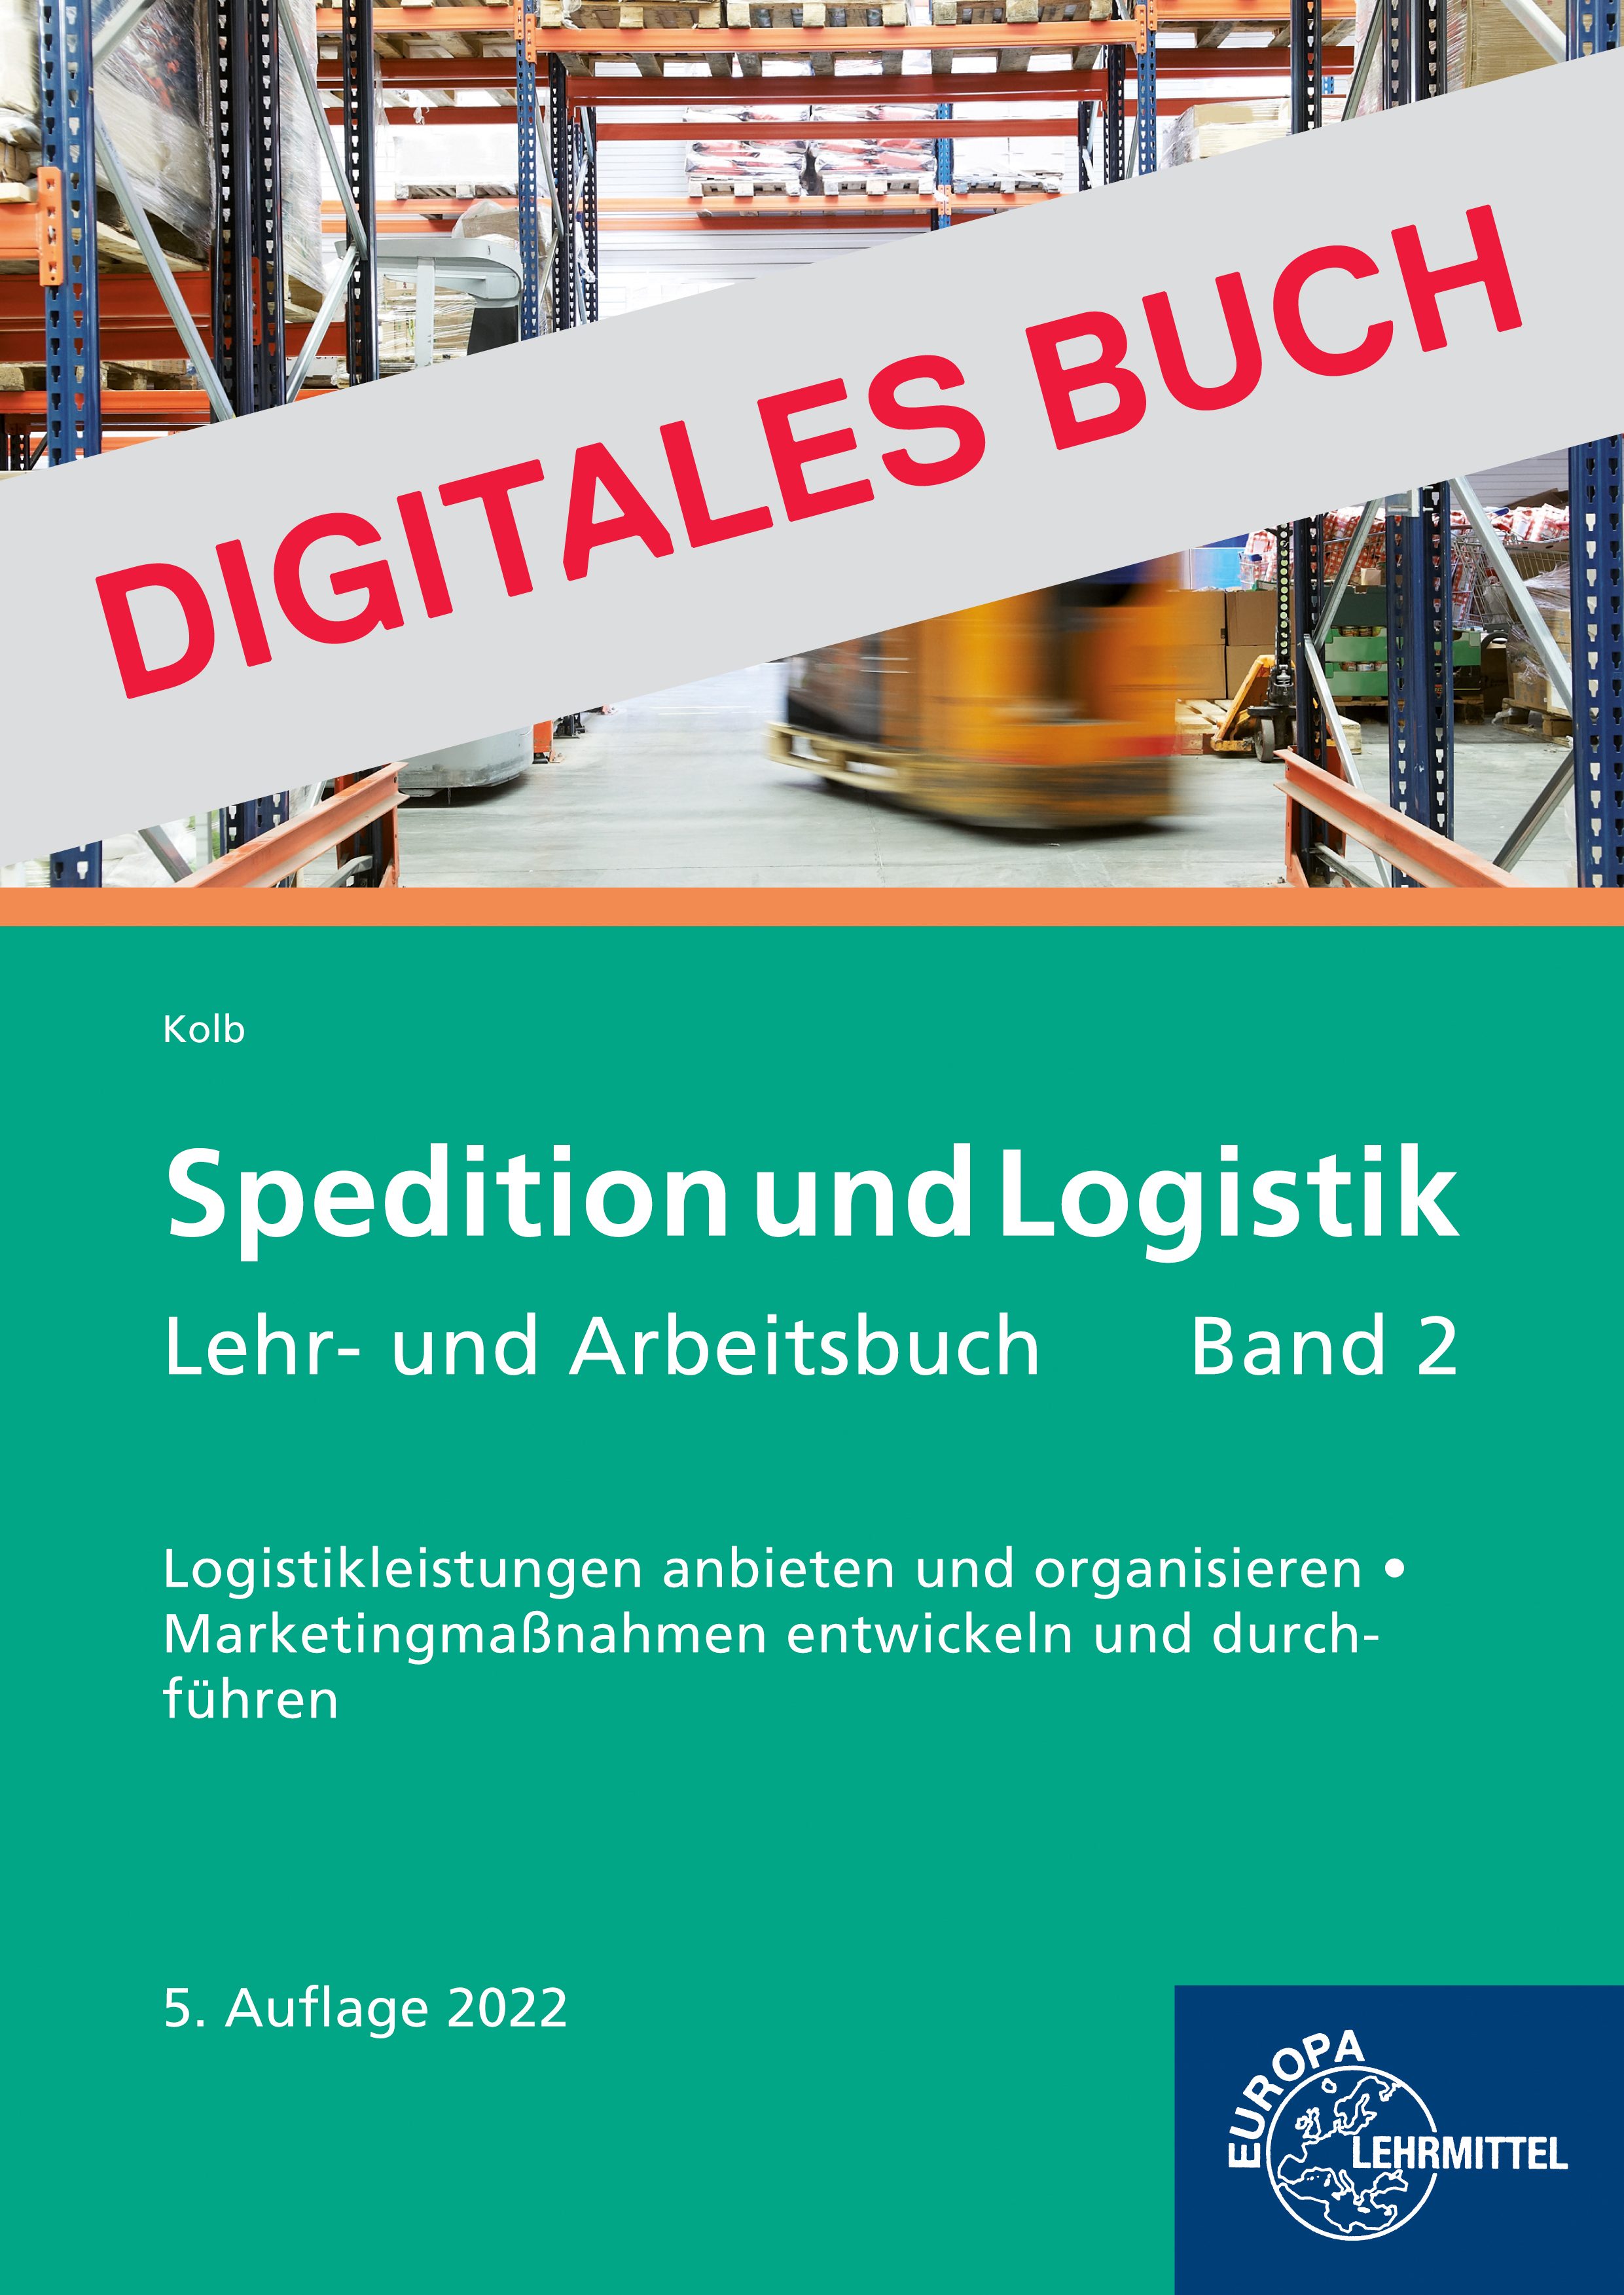 Spedition und Logistik, Band 2 - Digitales Buch